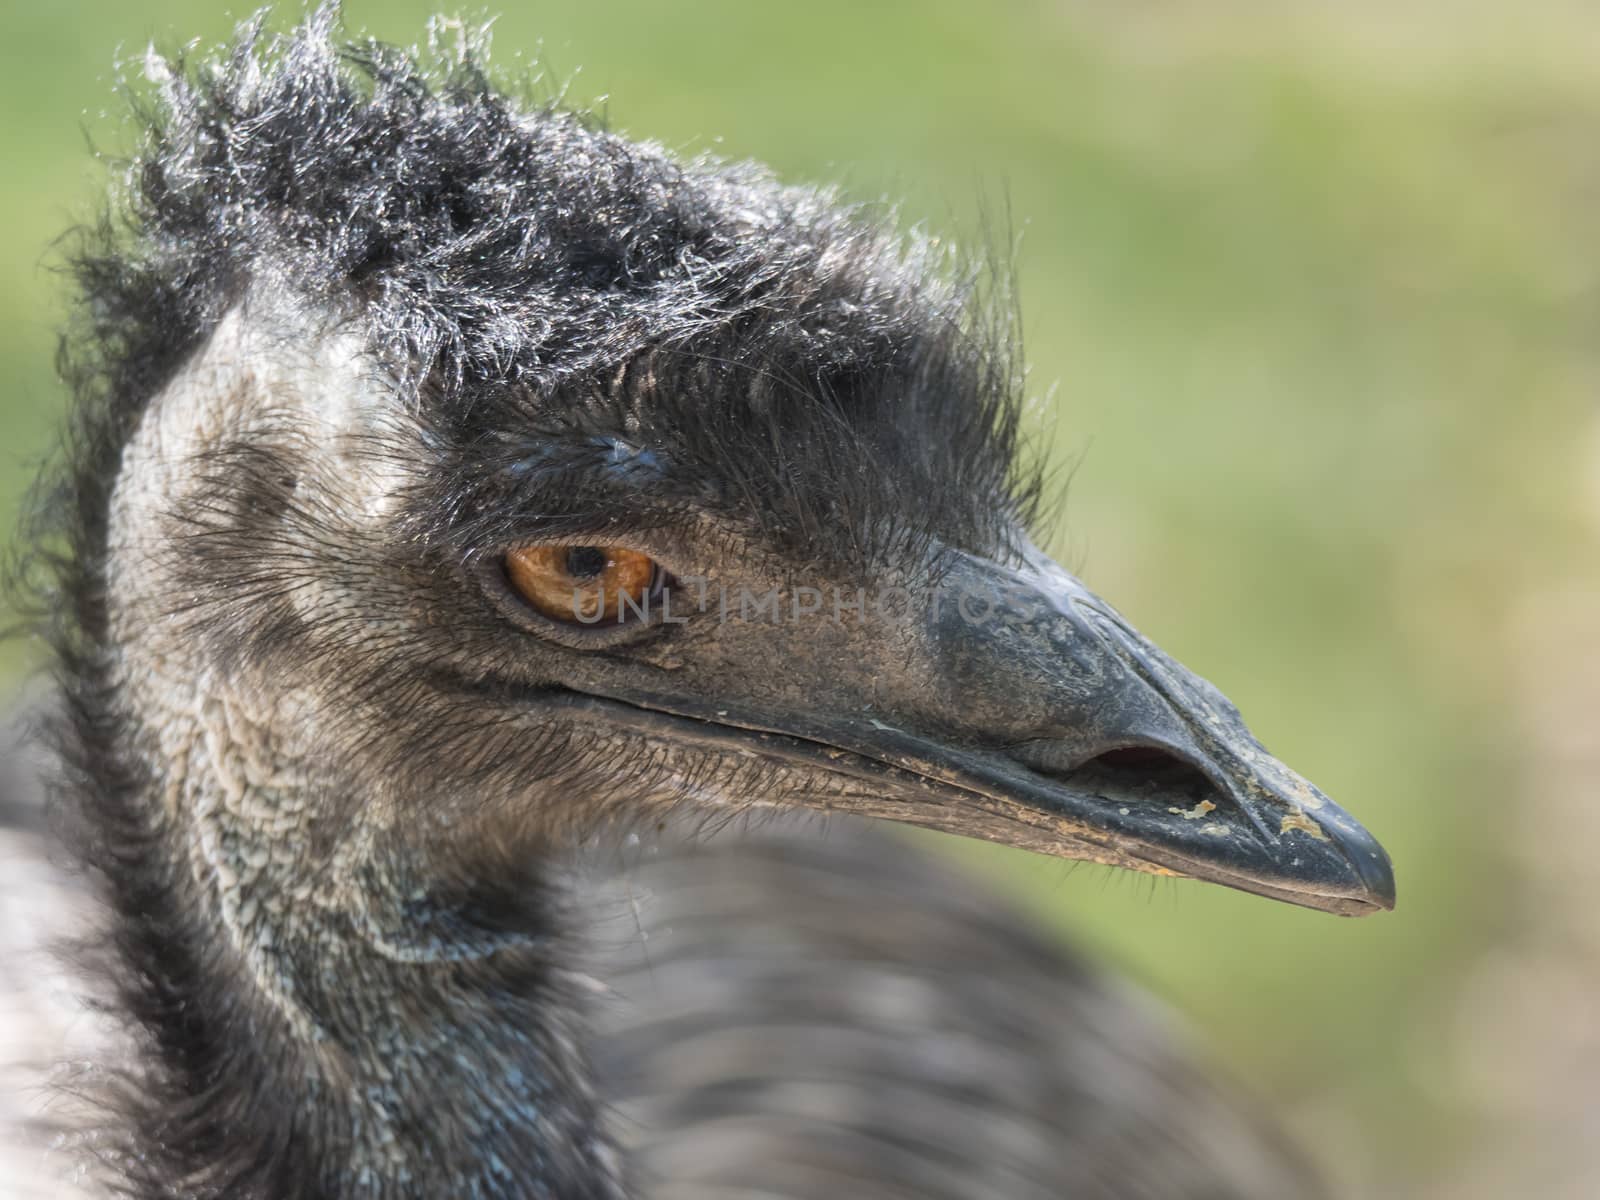 Close up profile portrait, head shot of Australian Emu,Dromaius novaehollandiae, Blurred, natural, bokeh background, Second largest bird on the world. Photography nature and animal wildlife. by Henkeova